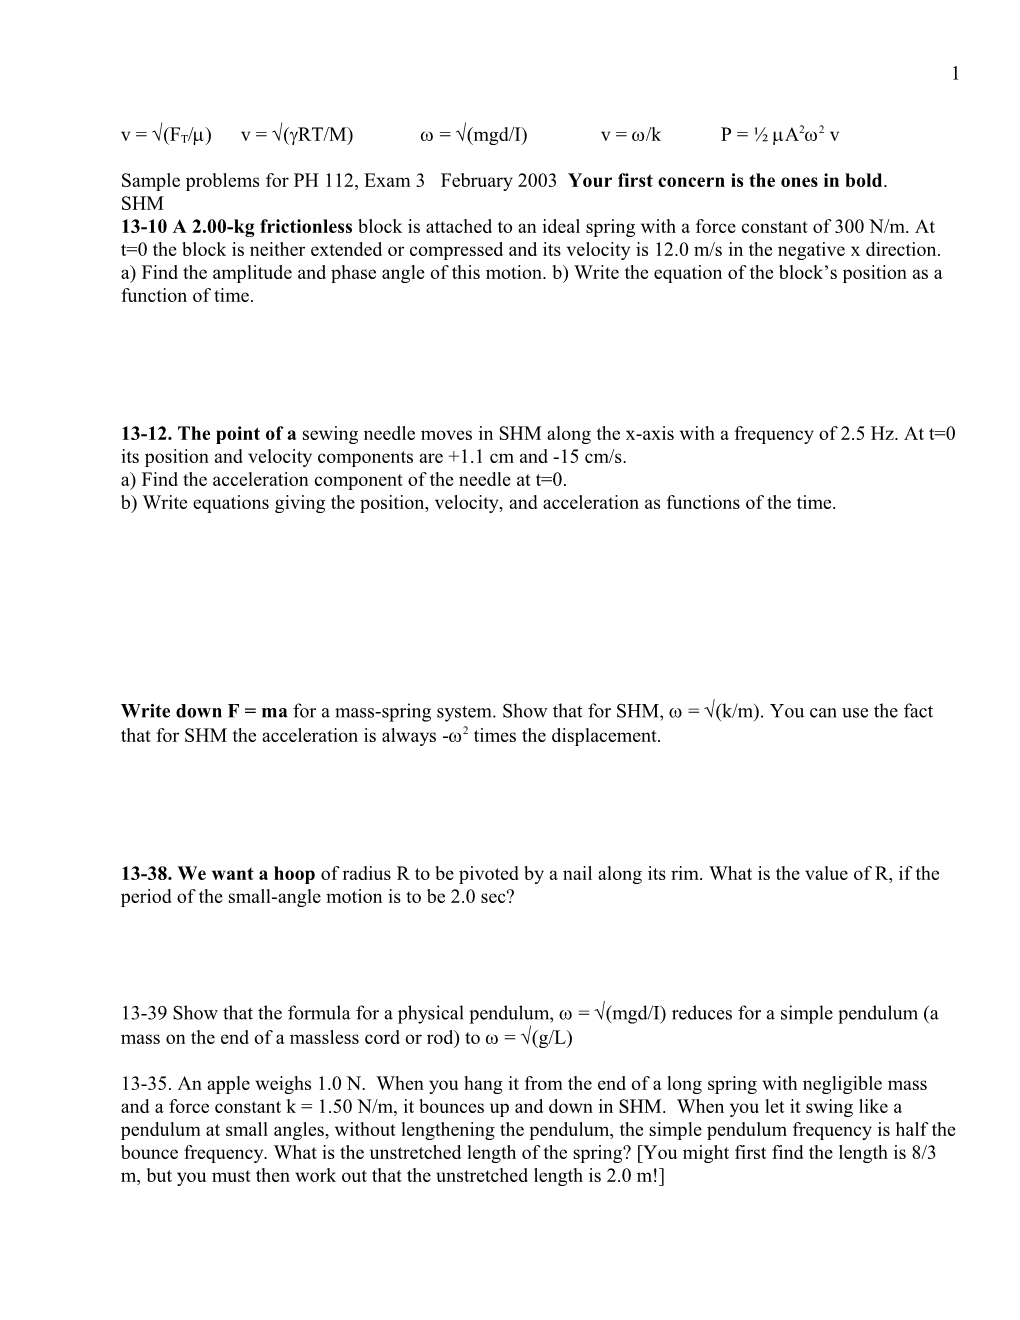 Sample Problems for PH 112, Exam 3 February 2003